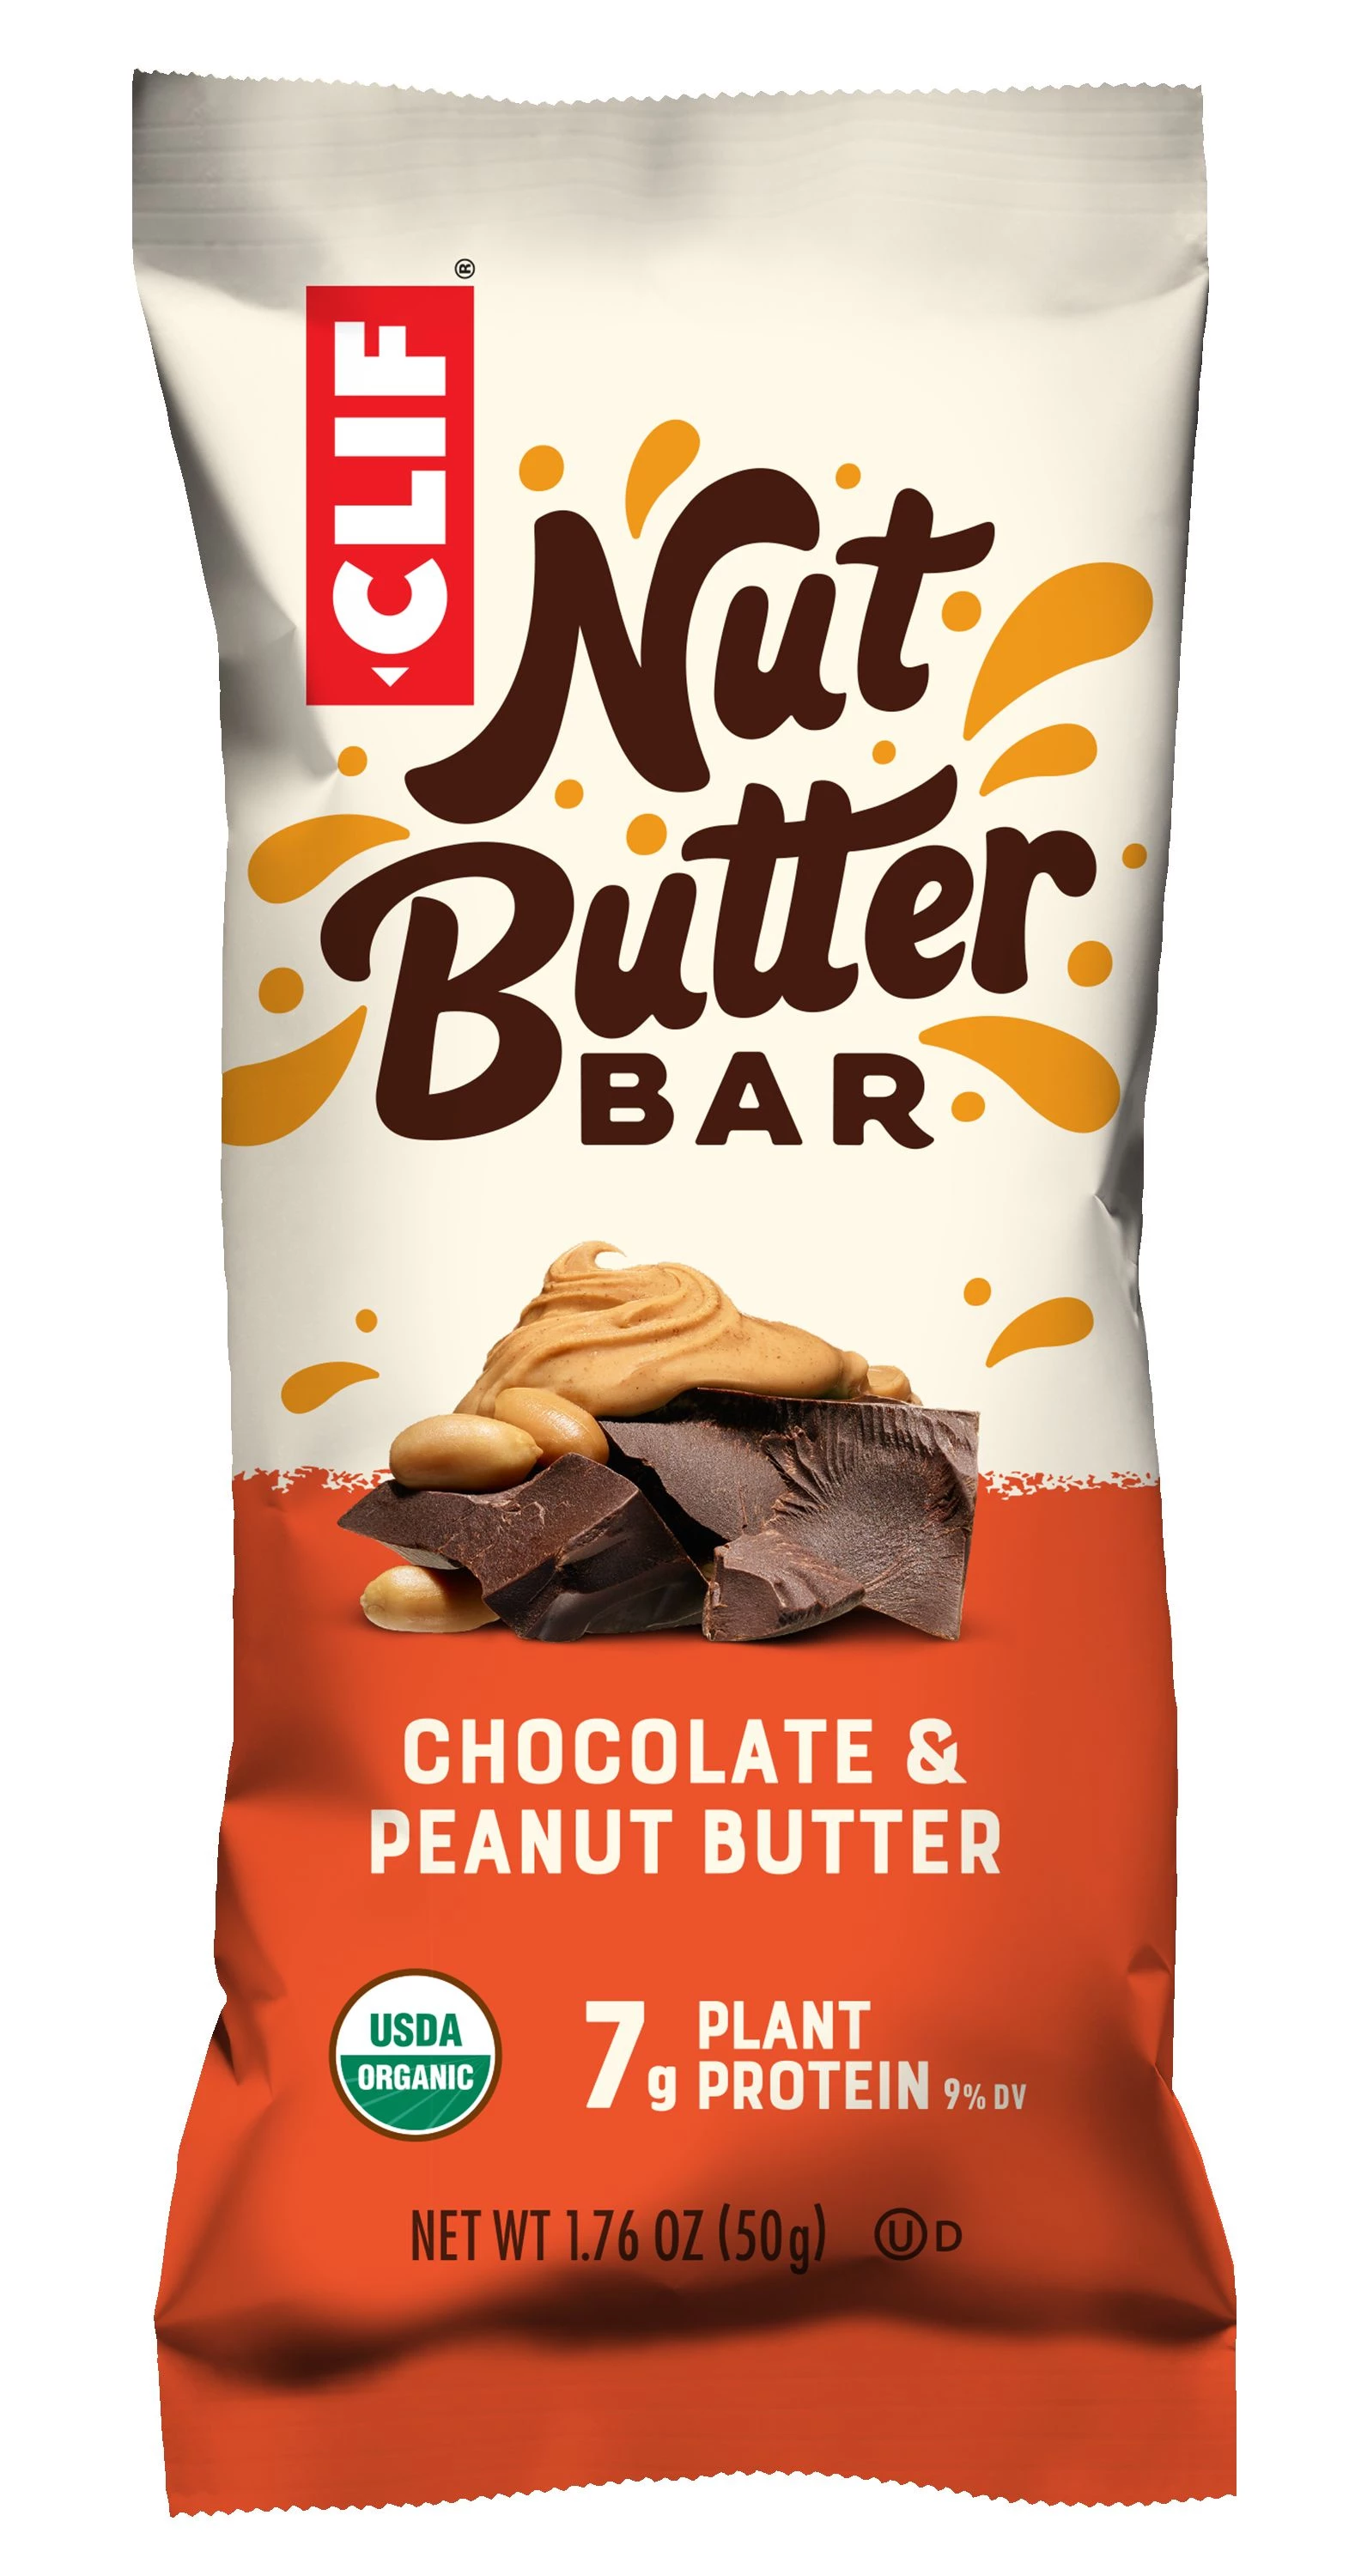 Peanut butter chocolate bar - CLIF BAR